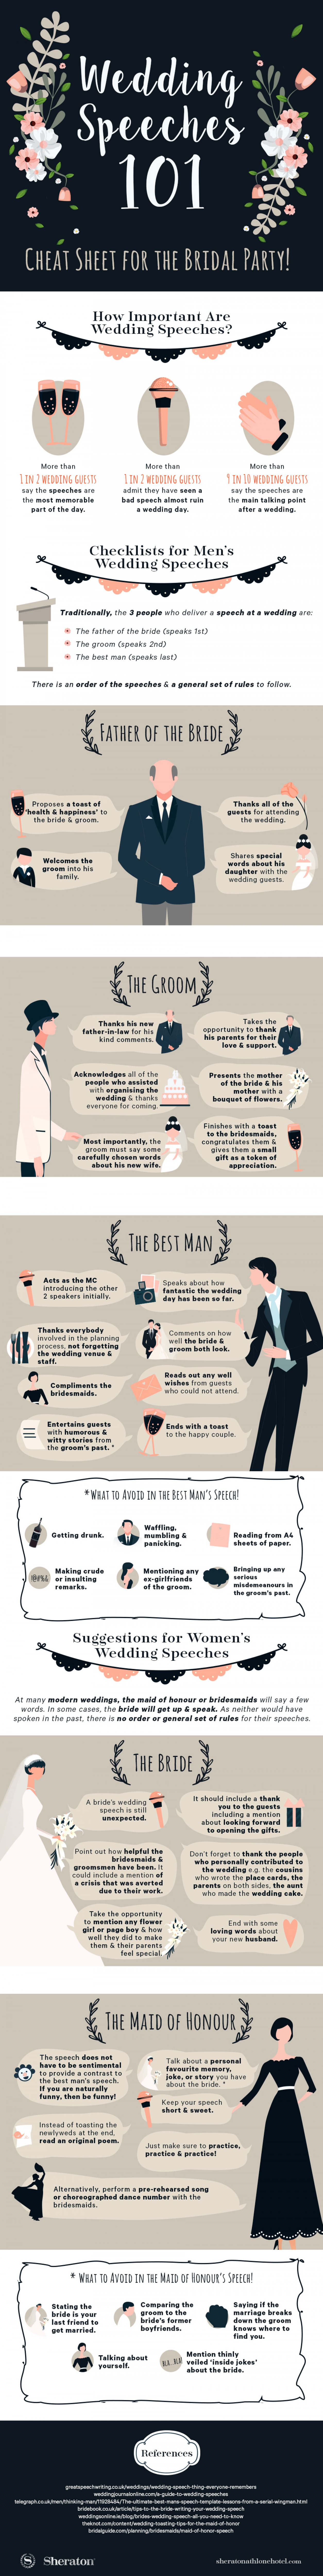 wedding speeches 101 infographic 57b700baee261 w15001